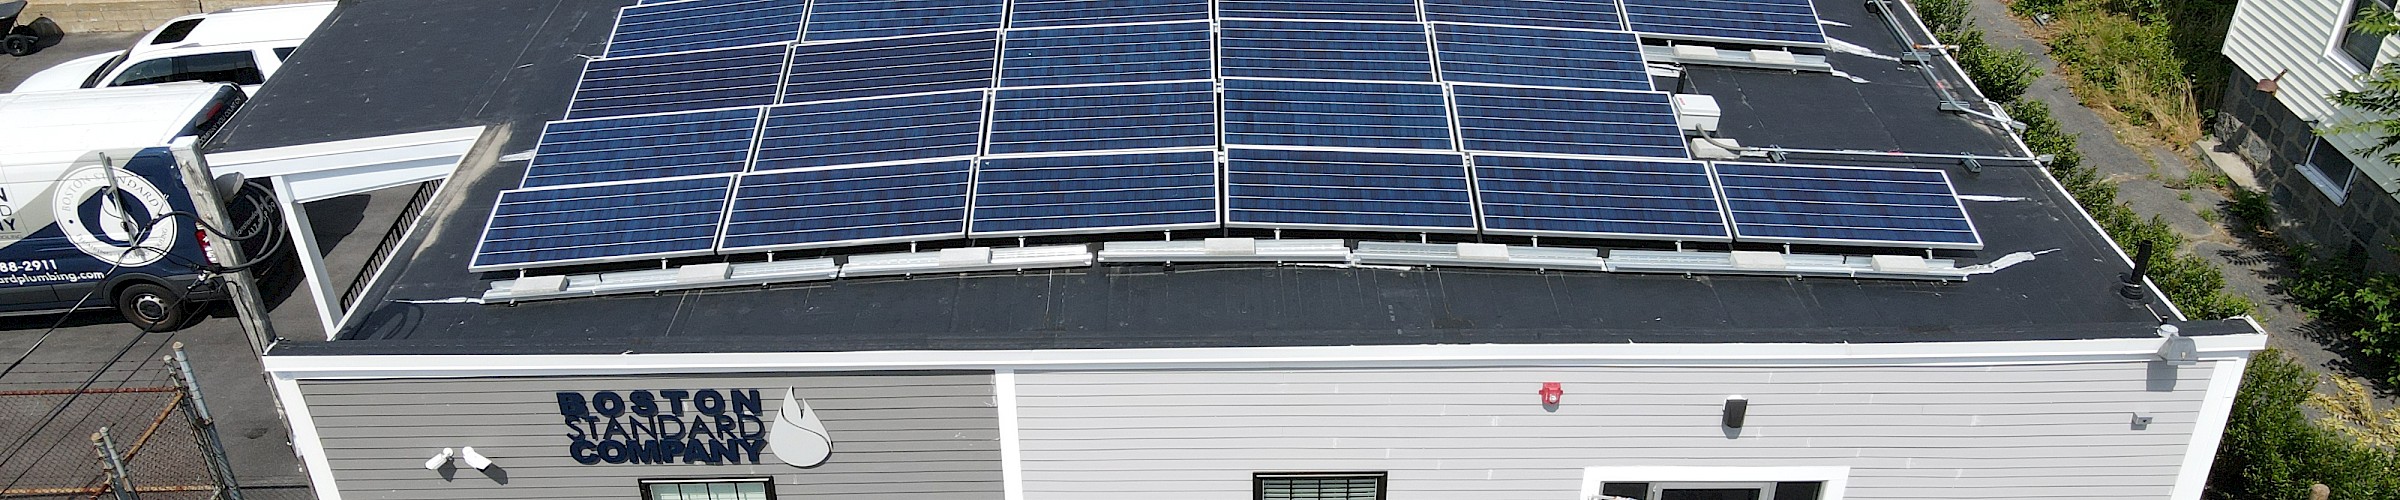 21.76 kW Commercial Solar Install on Boston Standard Company